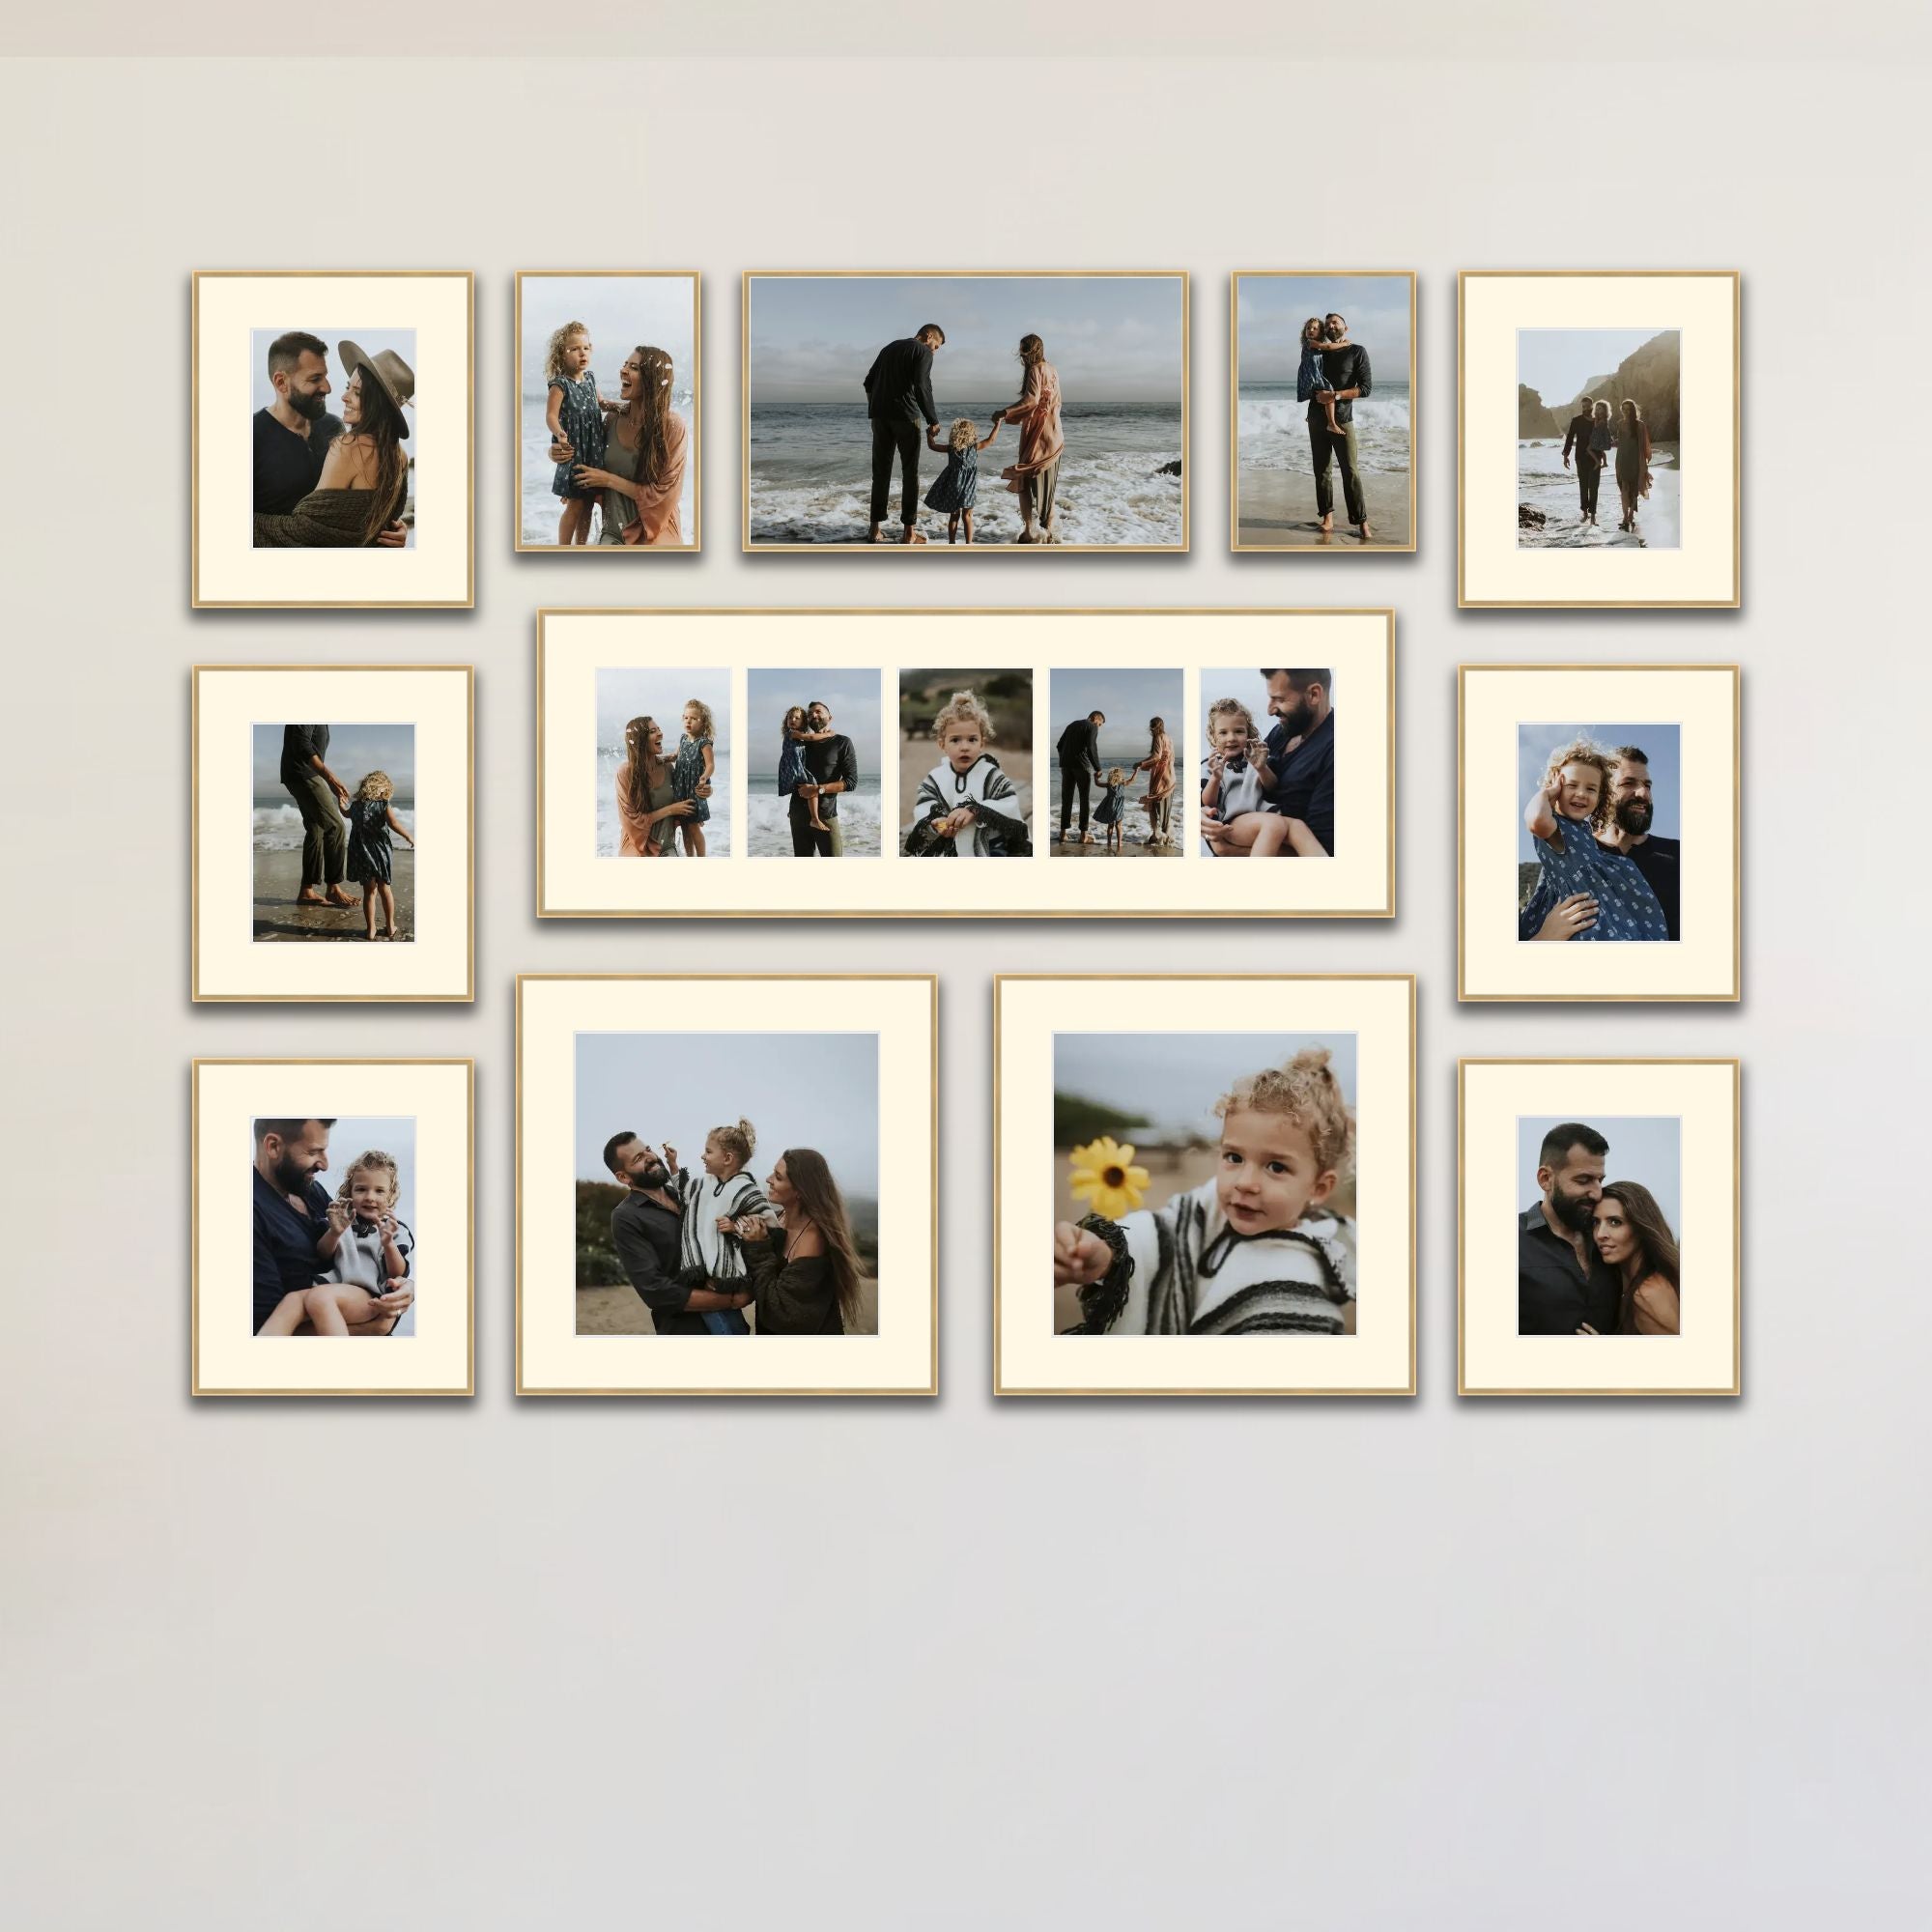 55" x 40" Gallery Wall Metal Frame (12 Frames)